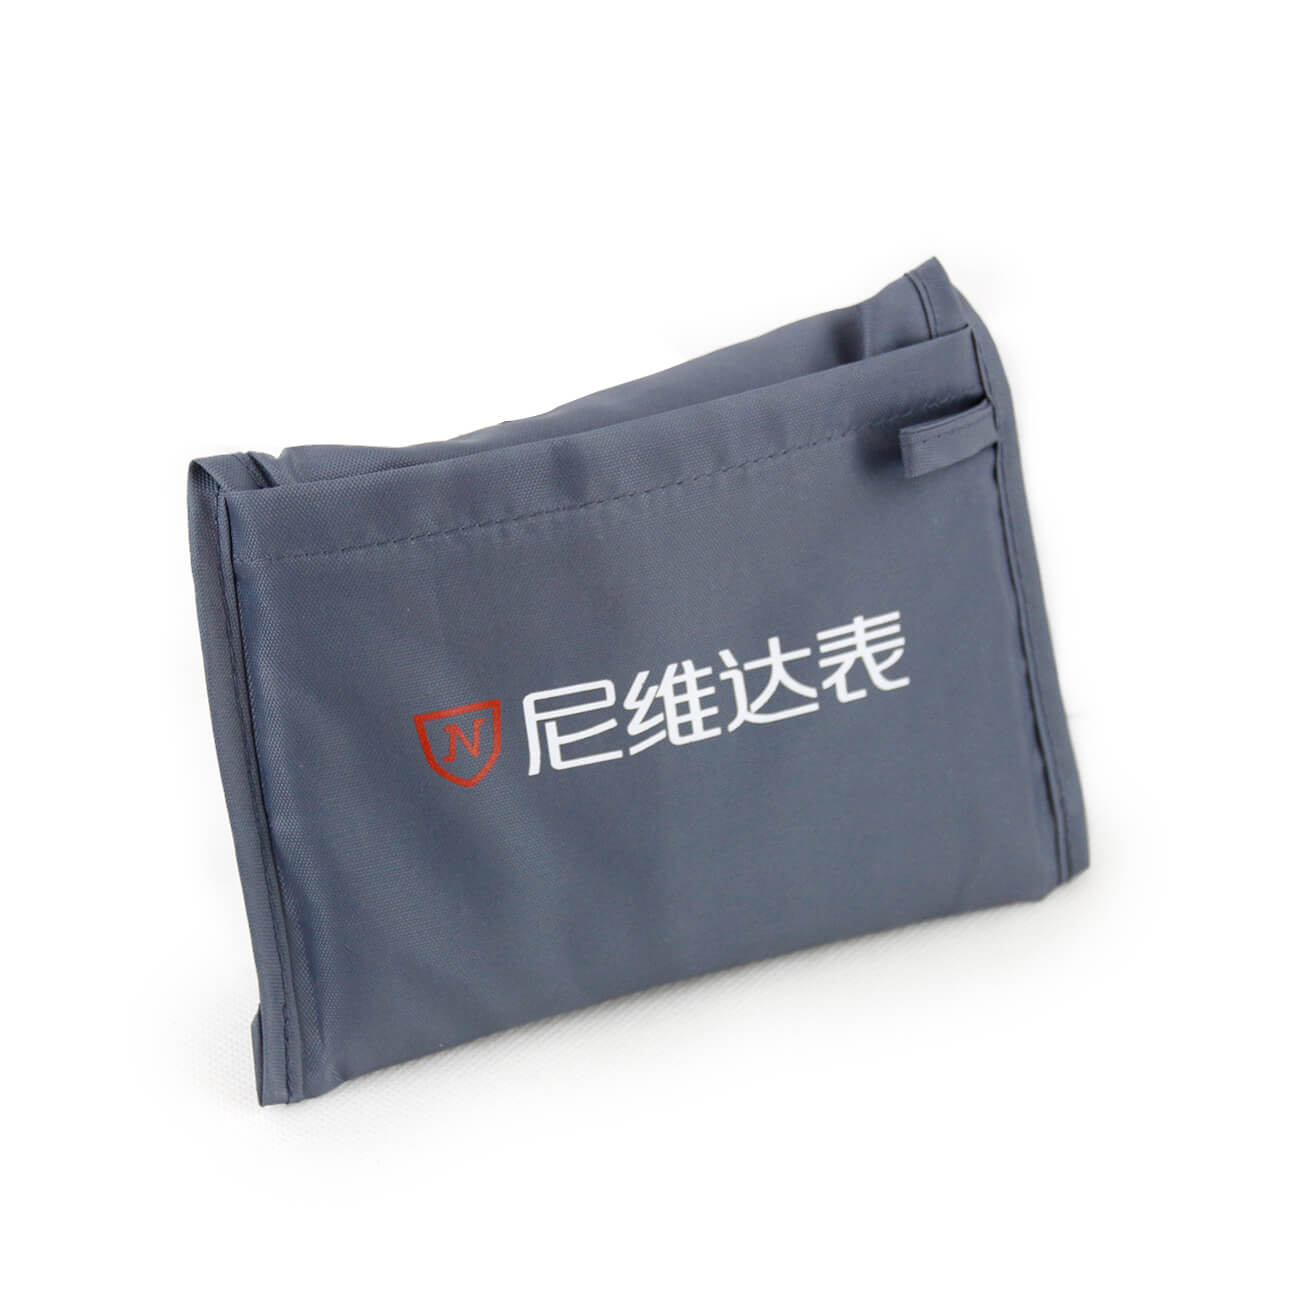 Foldable nylon shopping bag